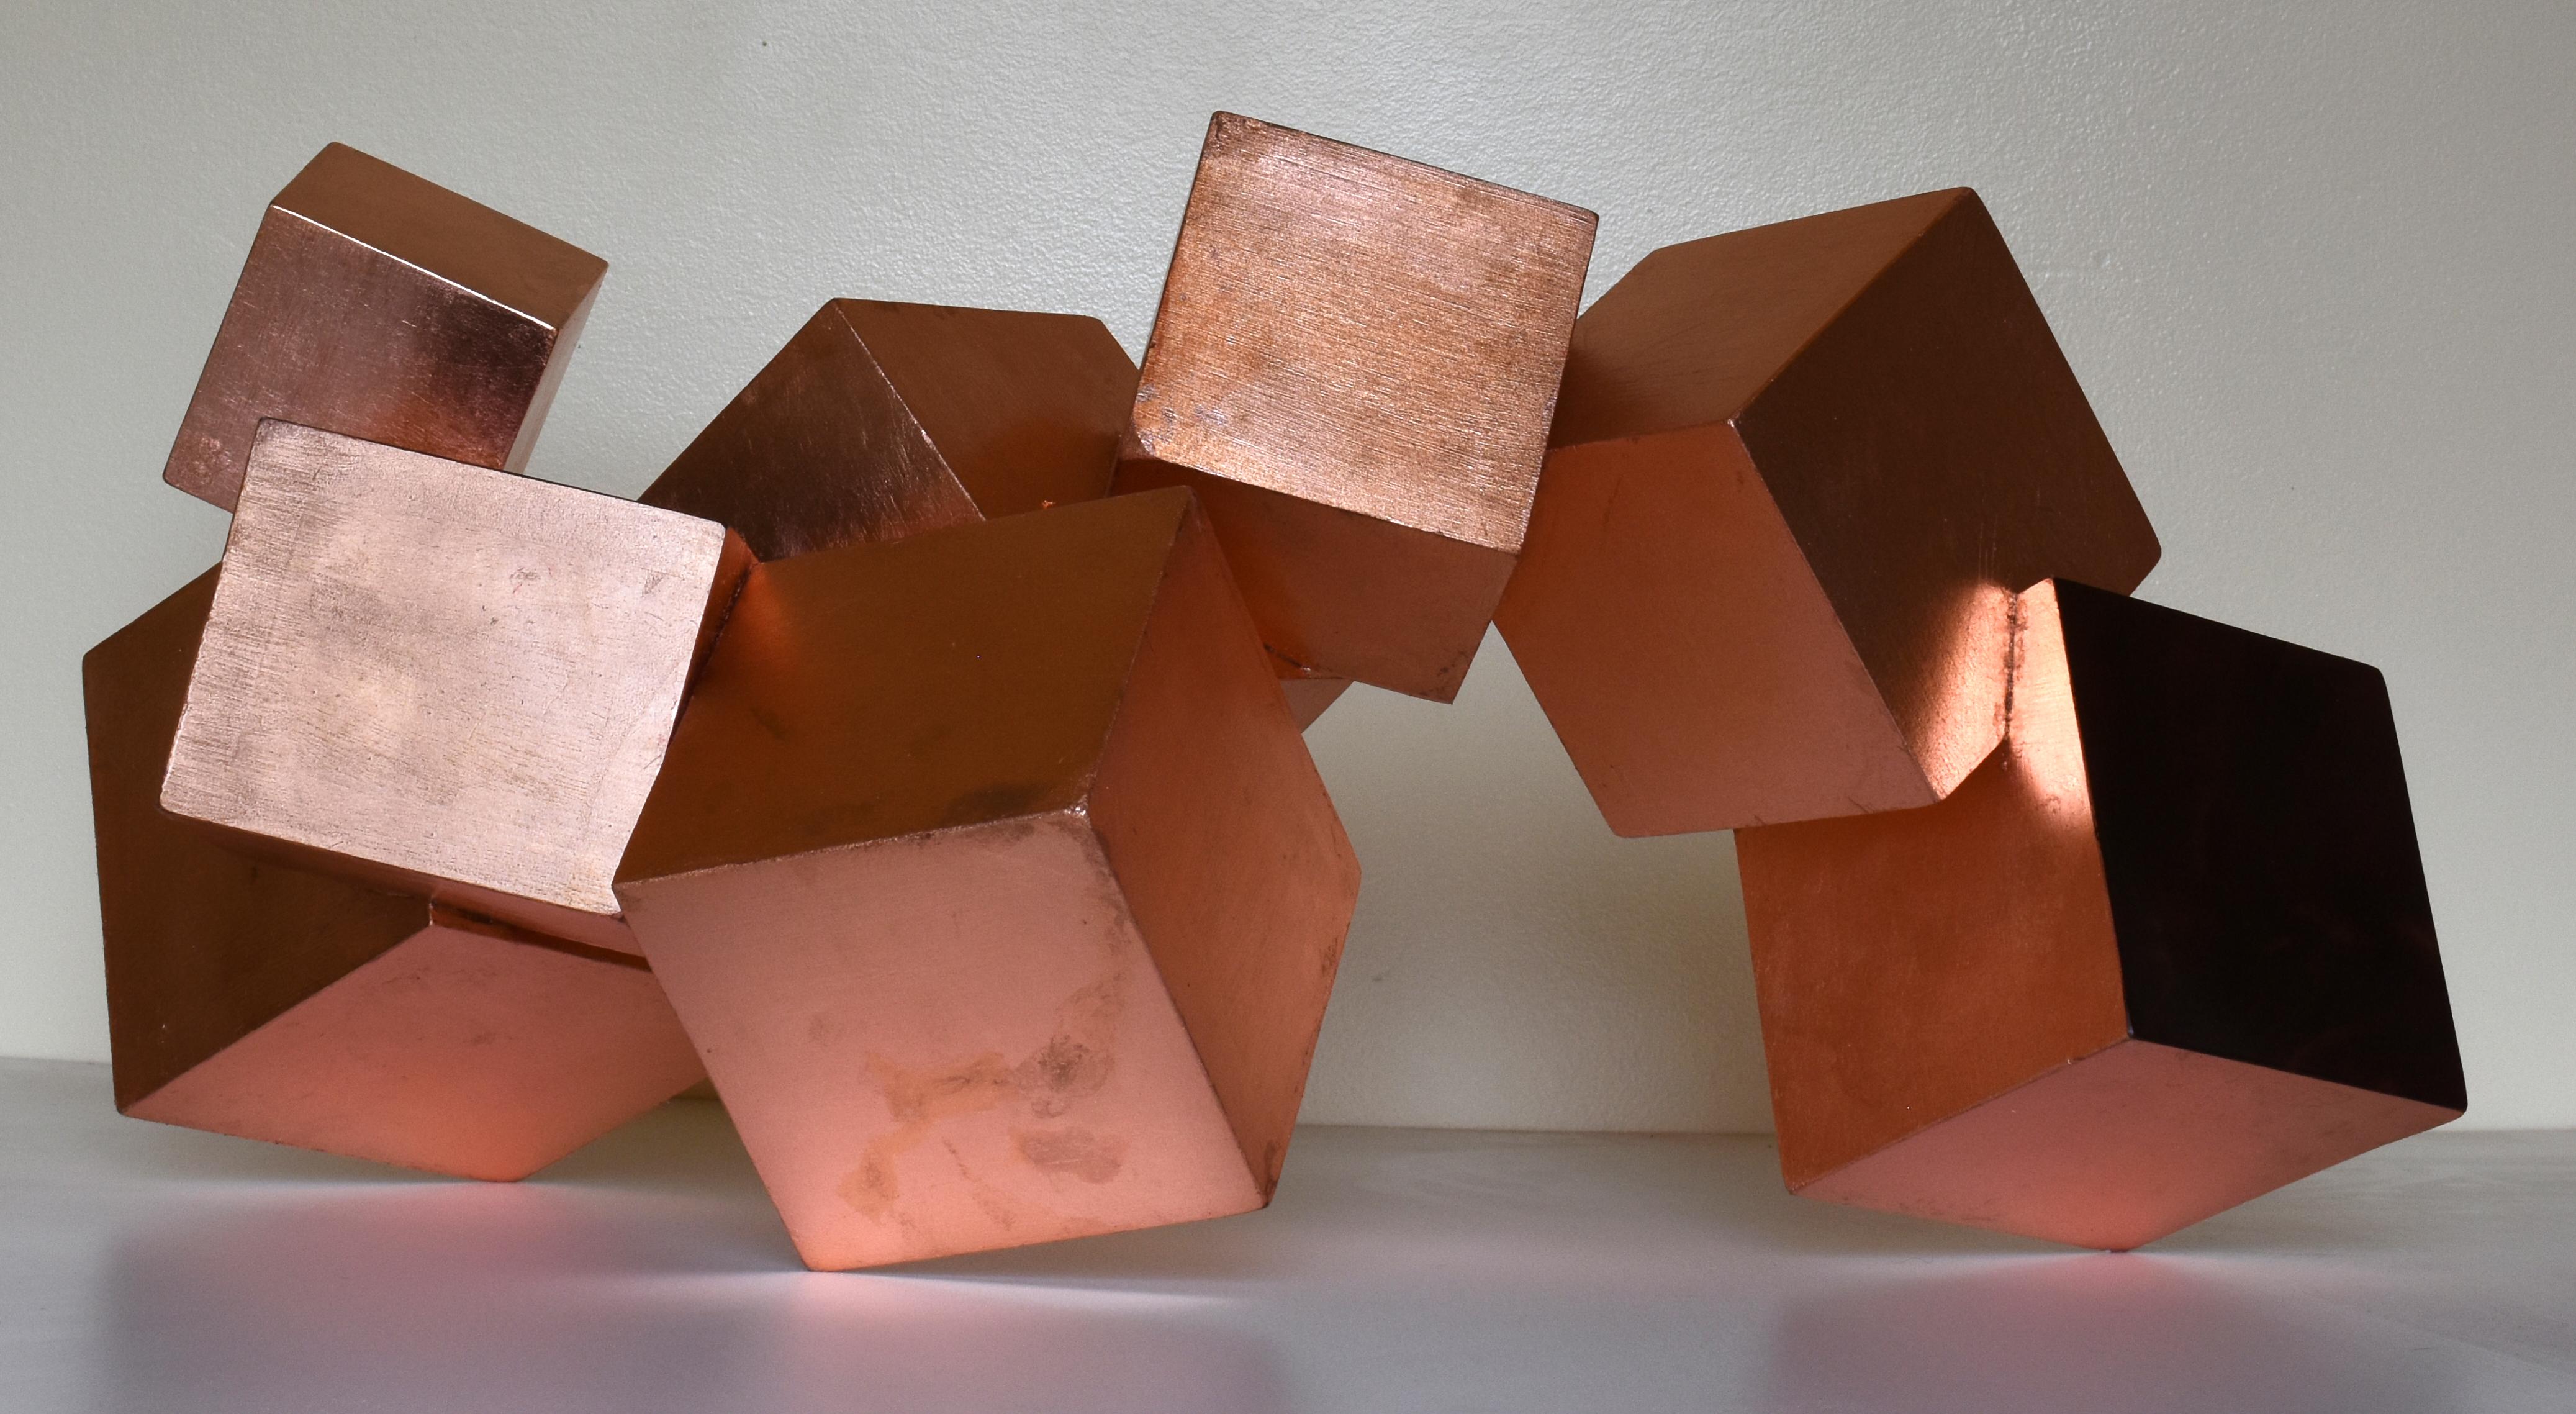 Copper and Mahogany Pyrite (exotic wood, metallic, cubic, table top sculpture) 9